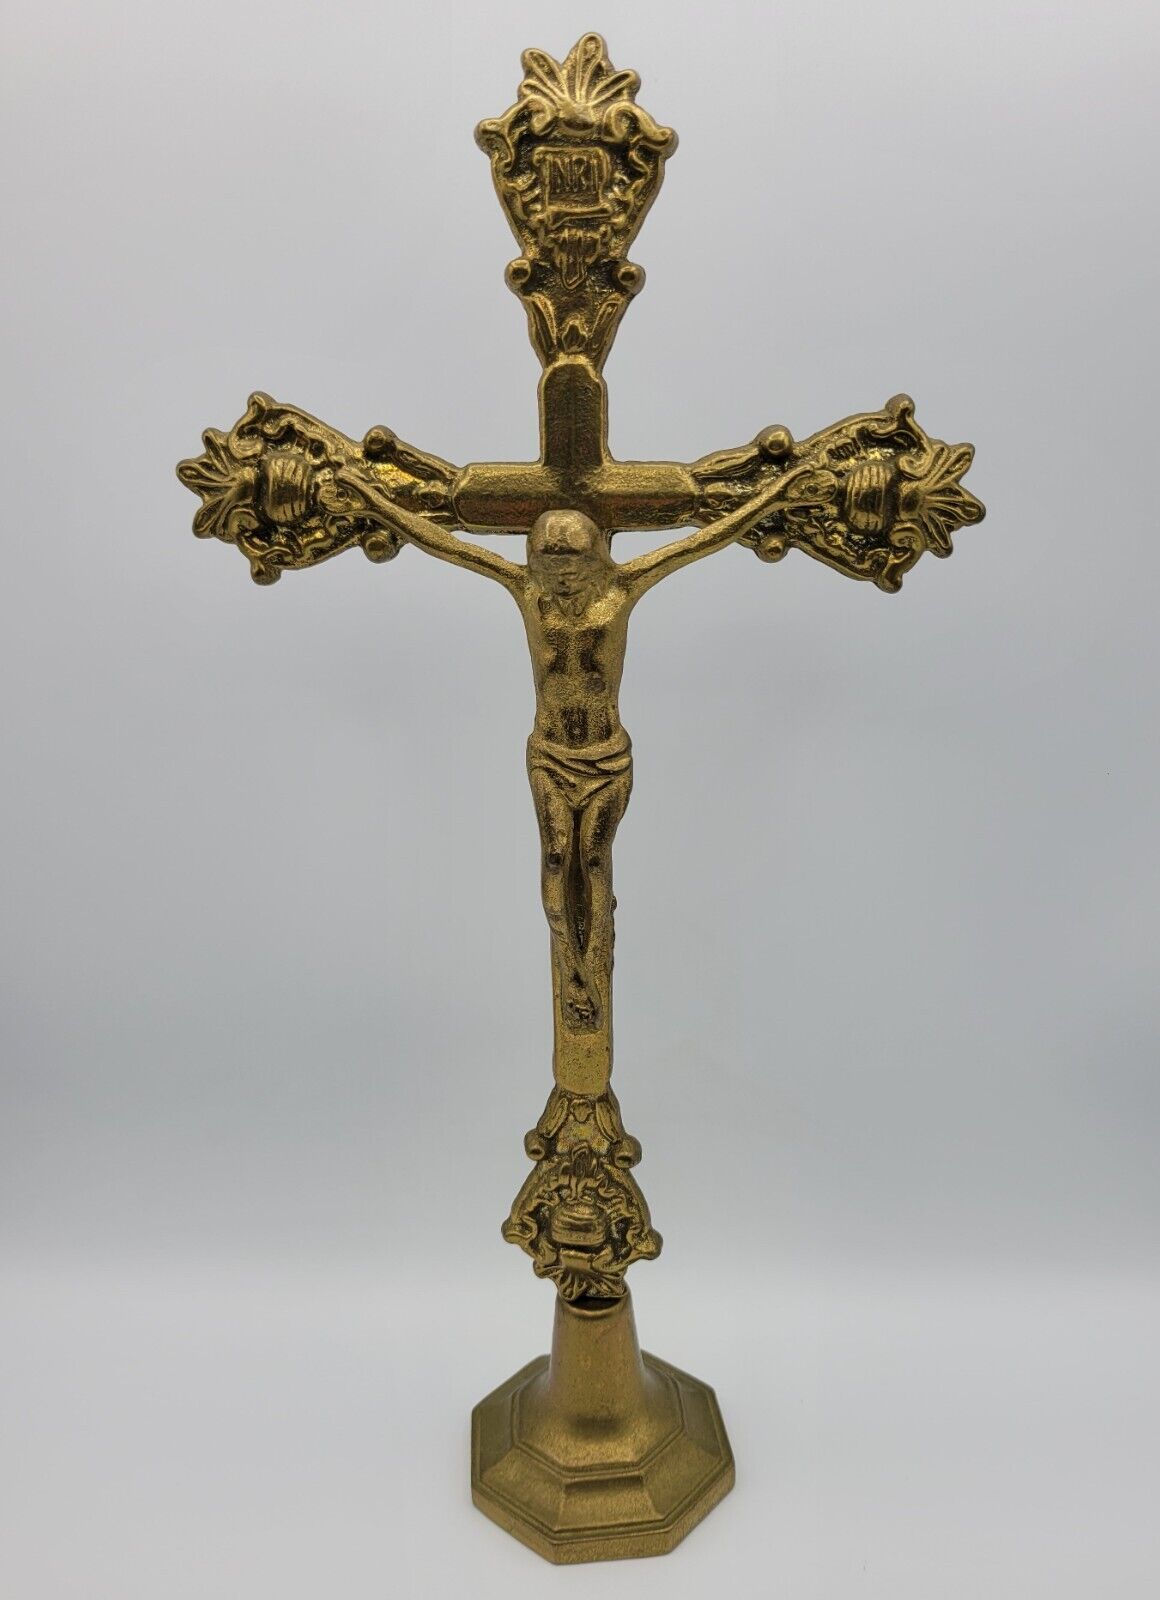 Vintage Brass Altar Cross Crucifix Church Jesus Ornate Large Beautiful 14.5